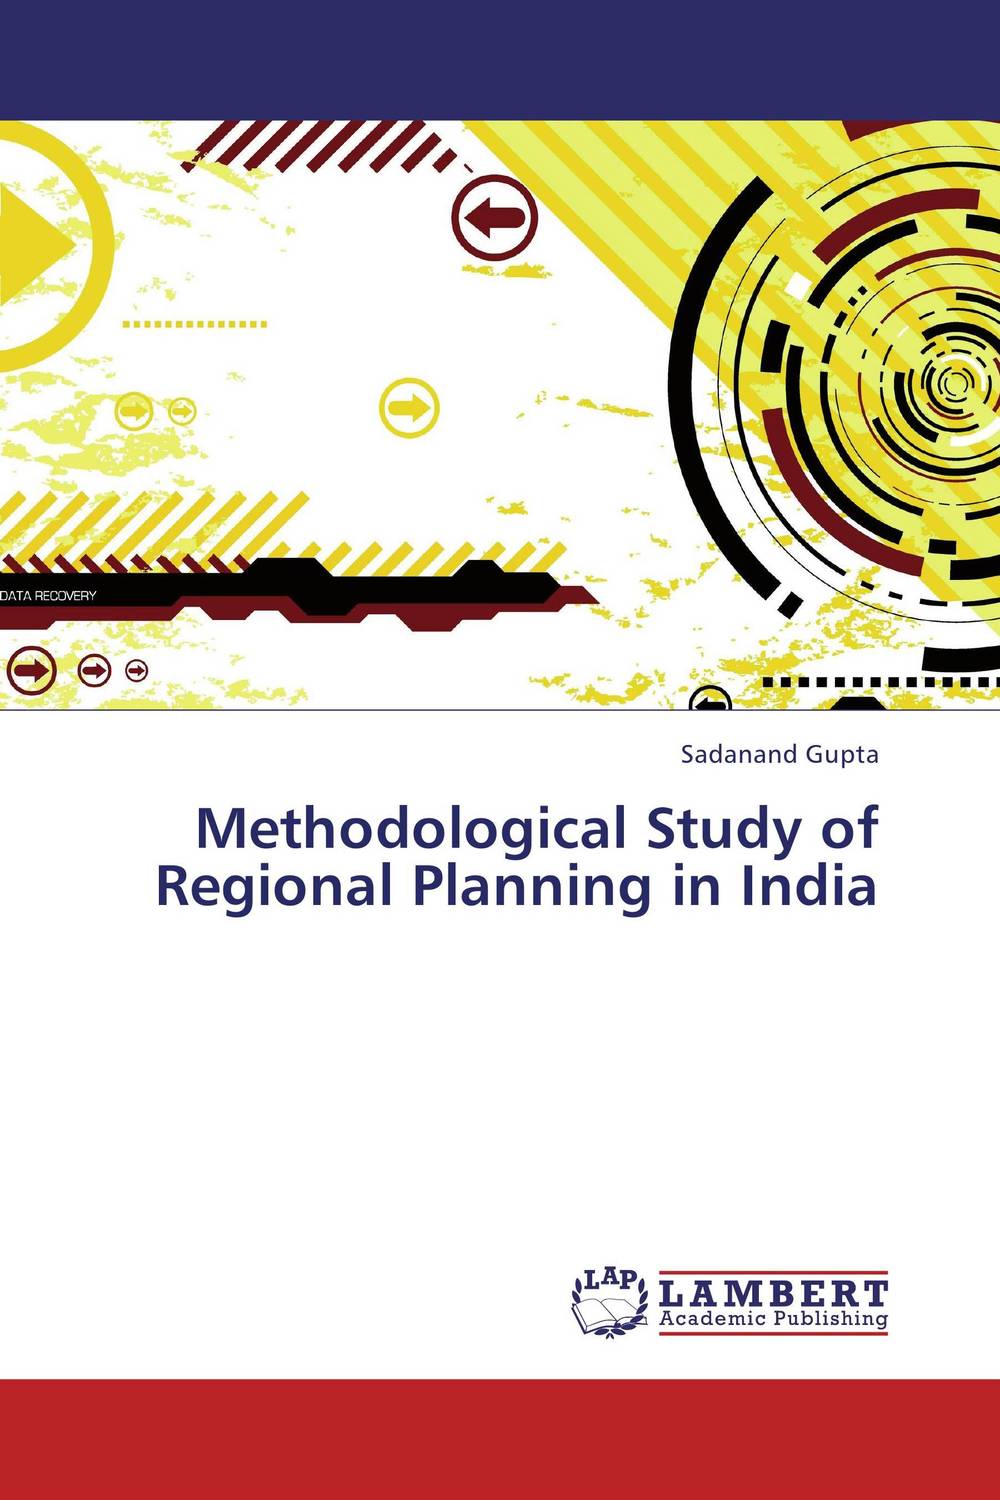 Methodological Study of Regional Planning in India